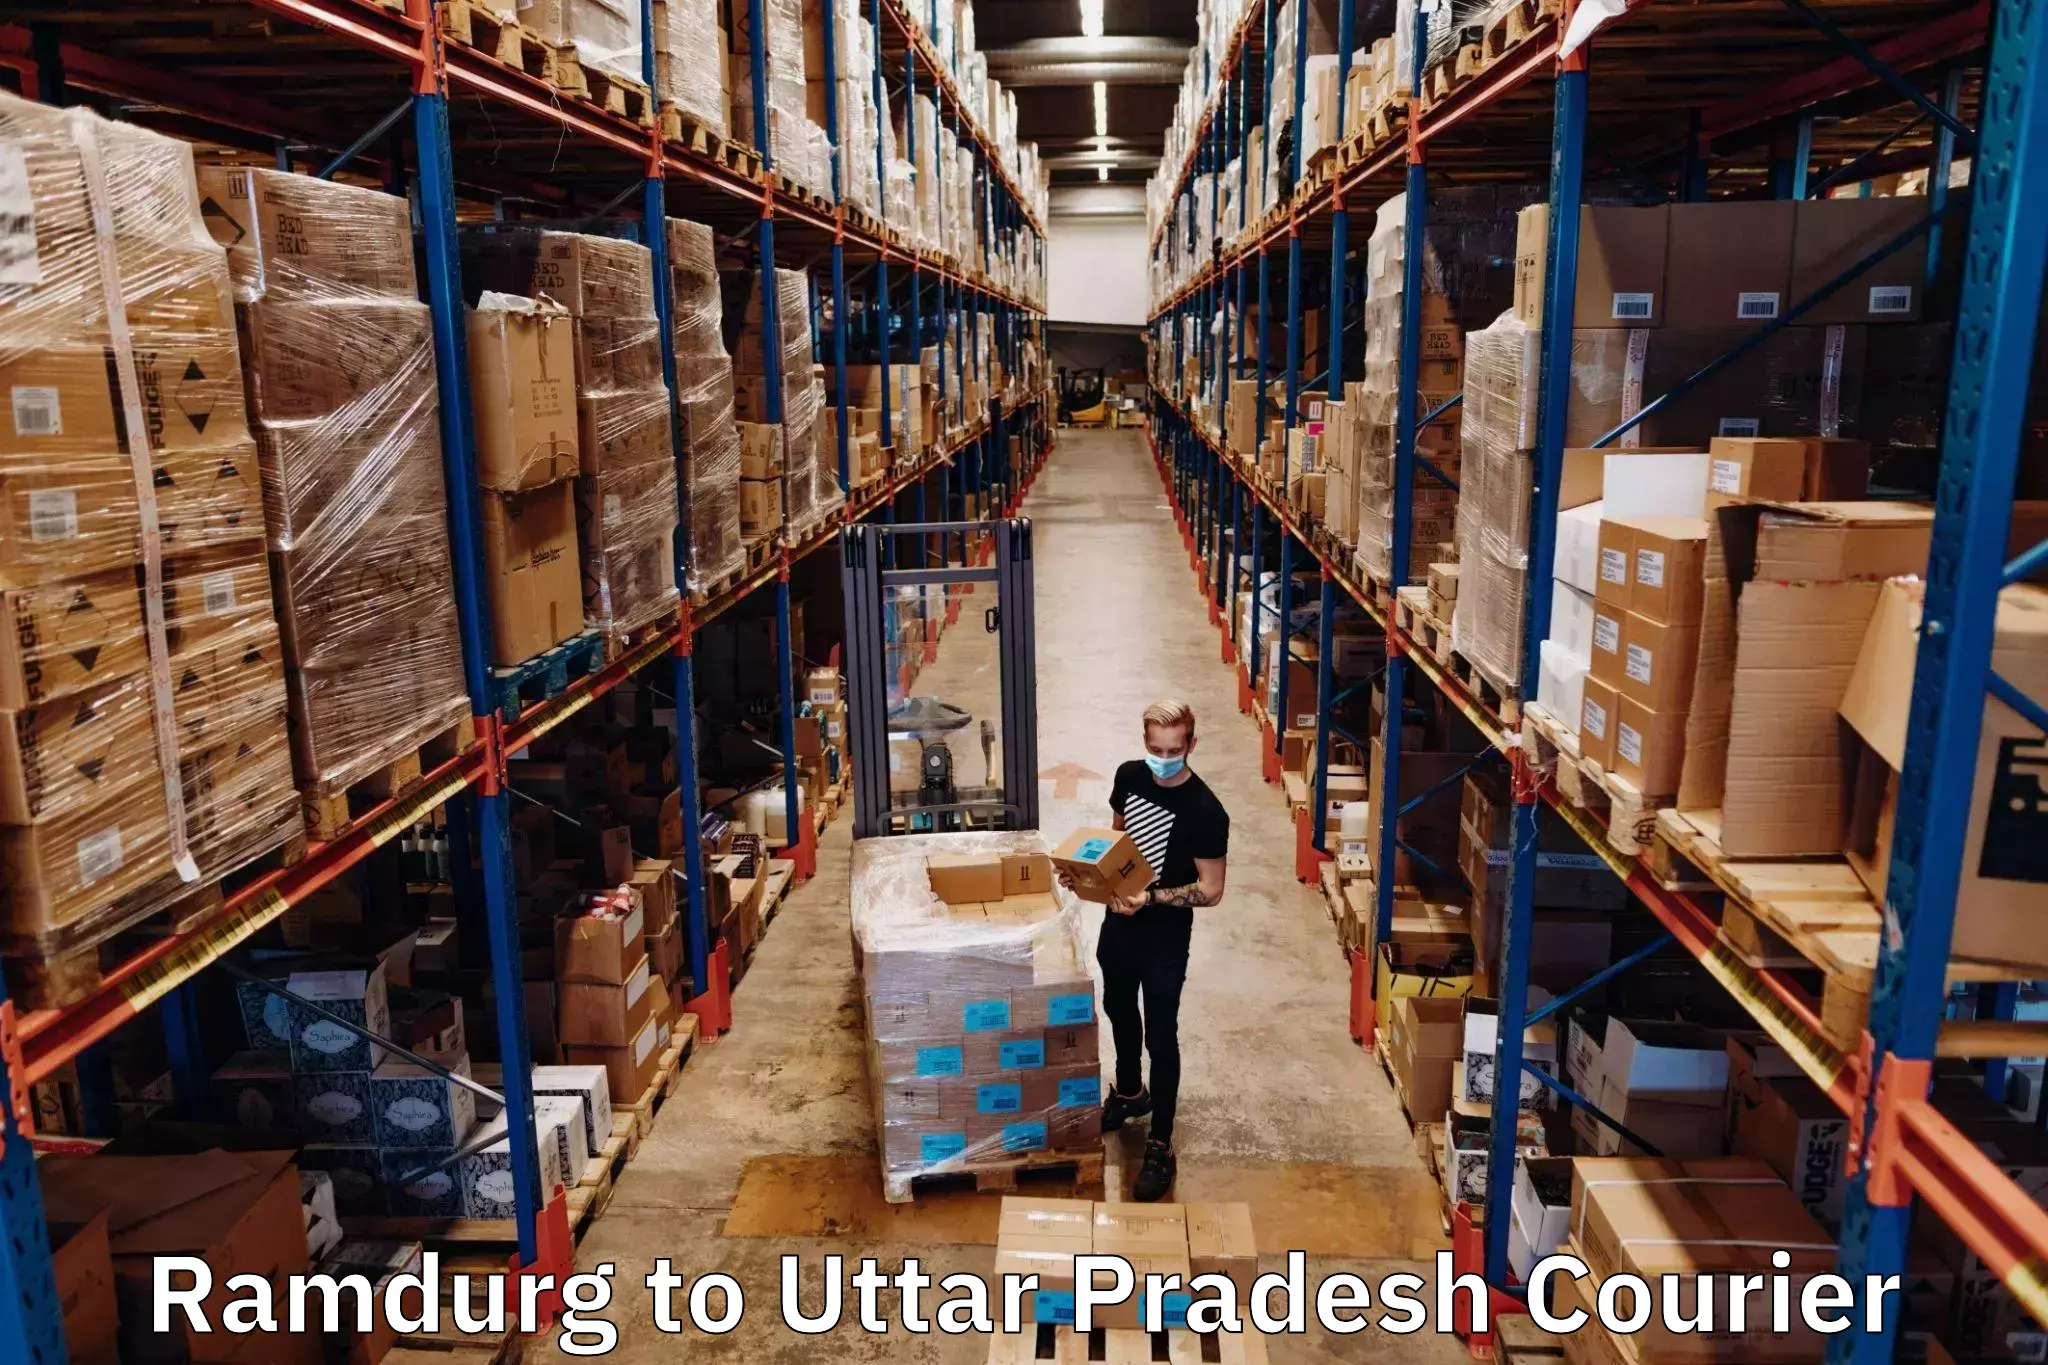 Courier service partnerships Ramdurg to Varanasi